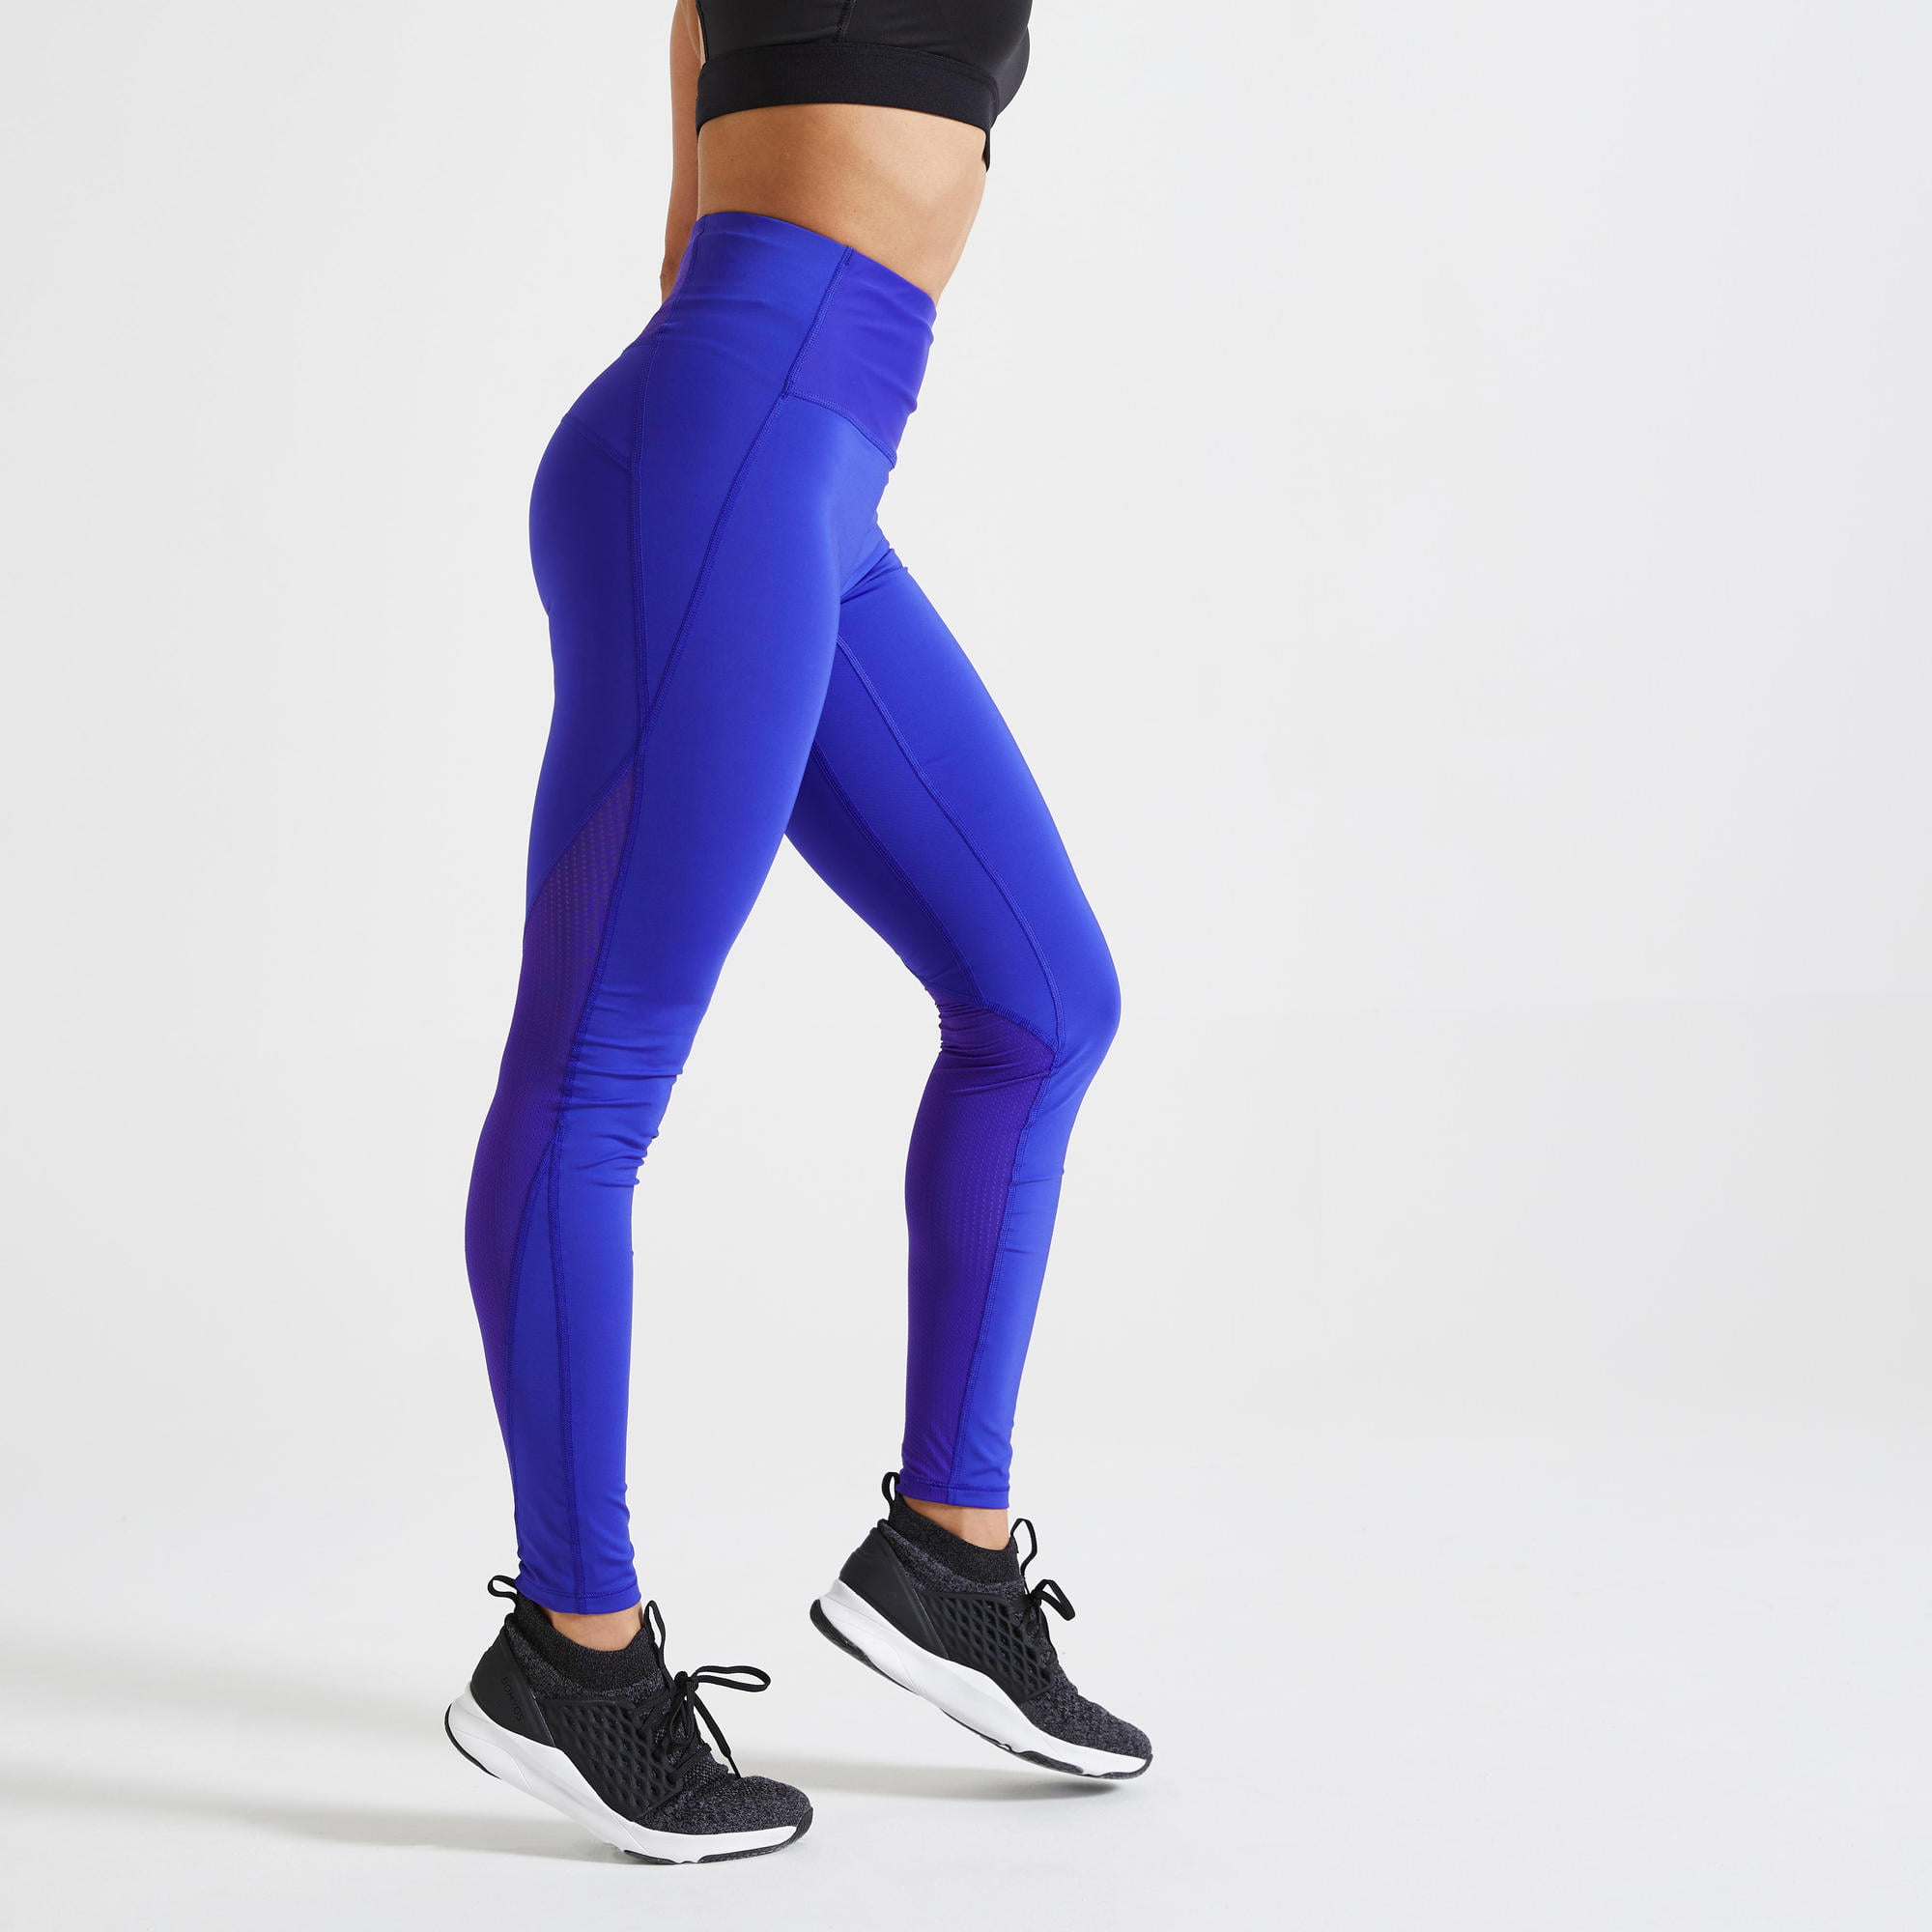 Best Squat-proof Leggings: Domyos 900 Women's Fitness Cardio